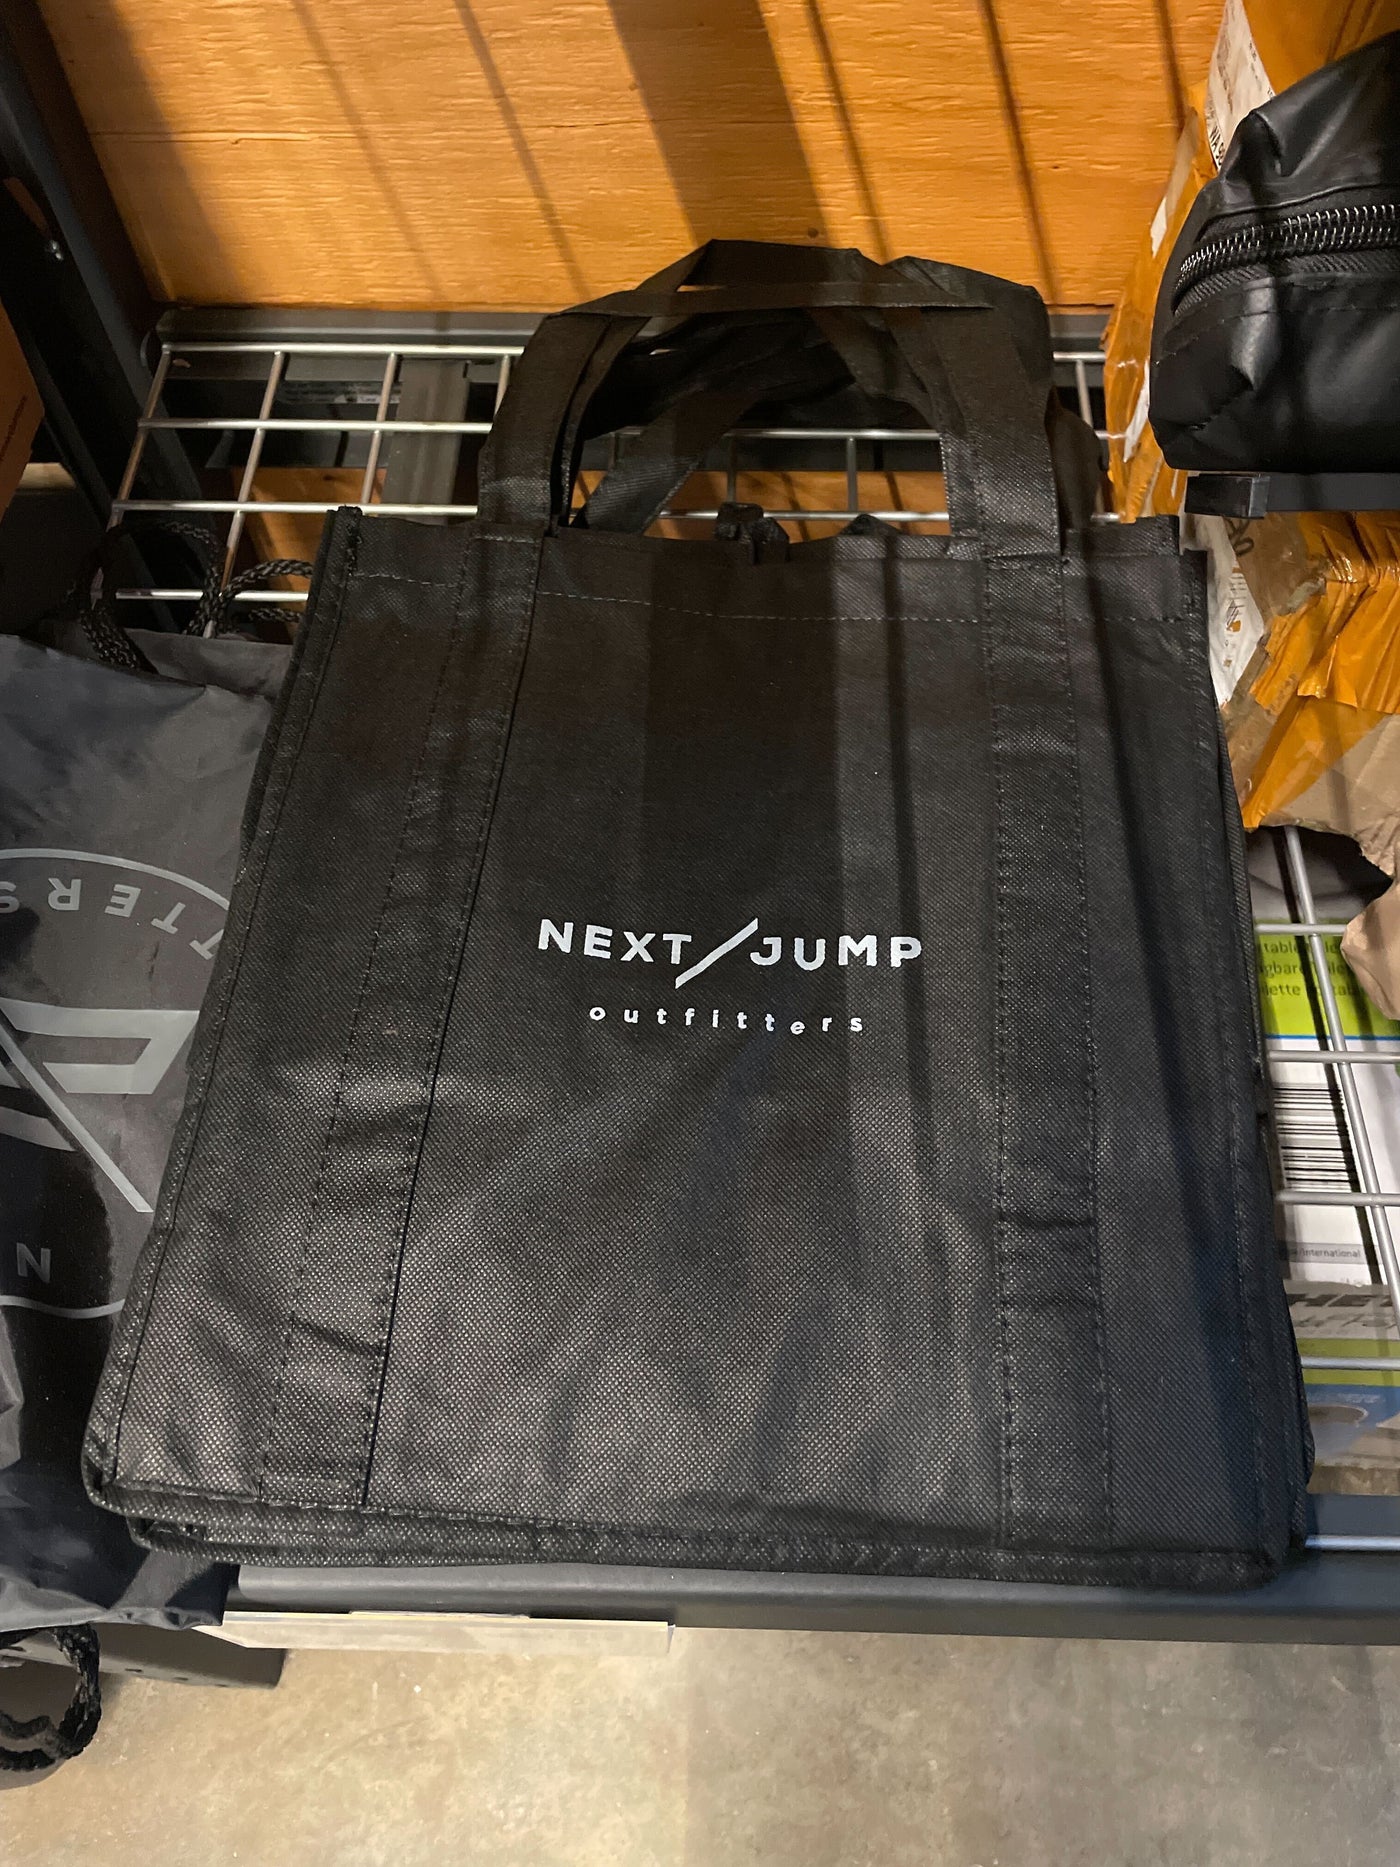 Next Jump Outfitters Reusable Bag